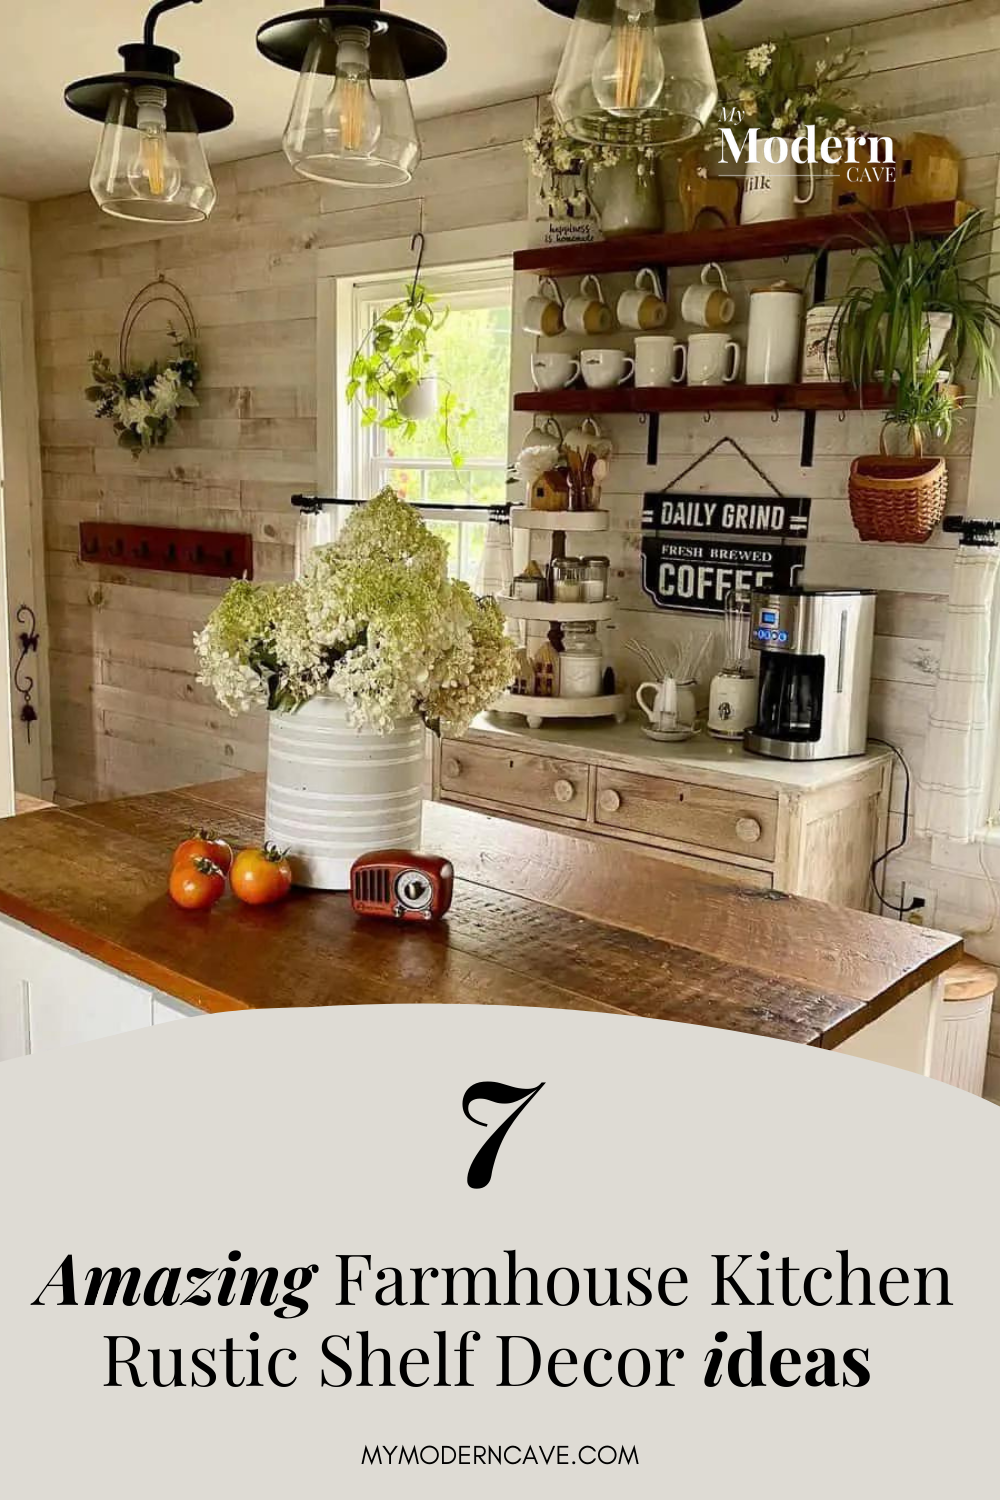 infographic on clever kitchen shelf decor ideas rustic farmhouse kitchen